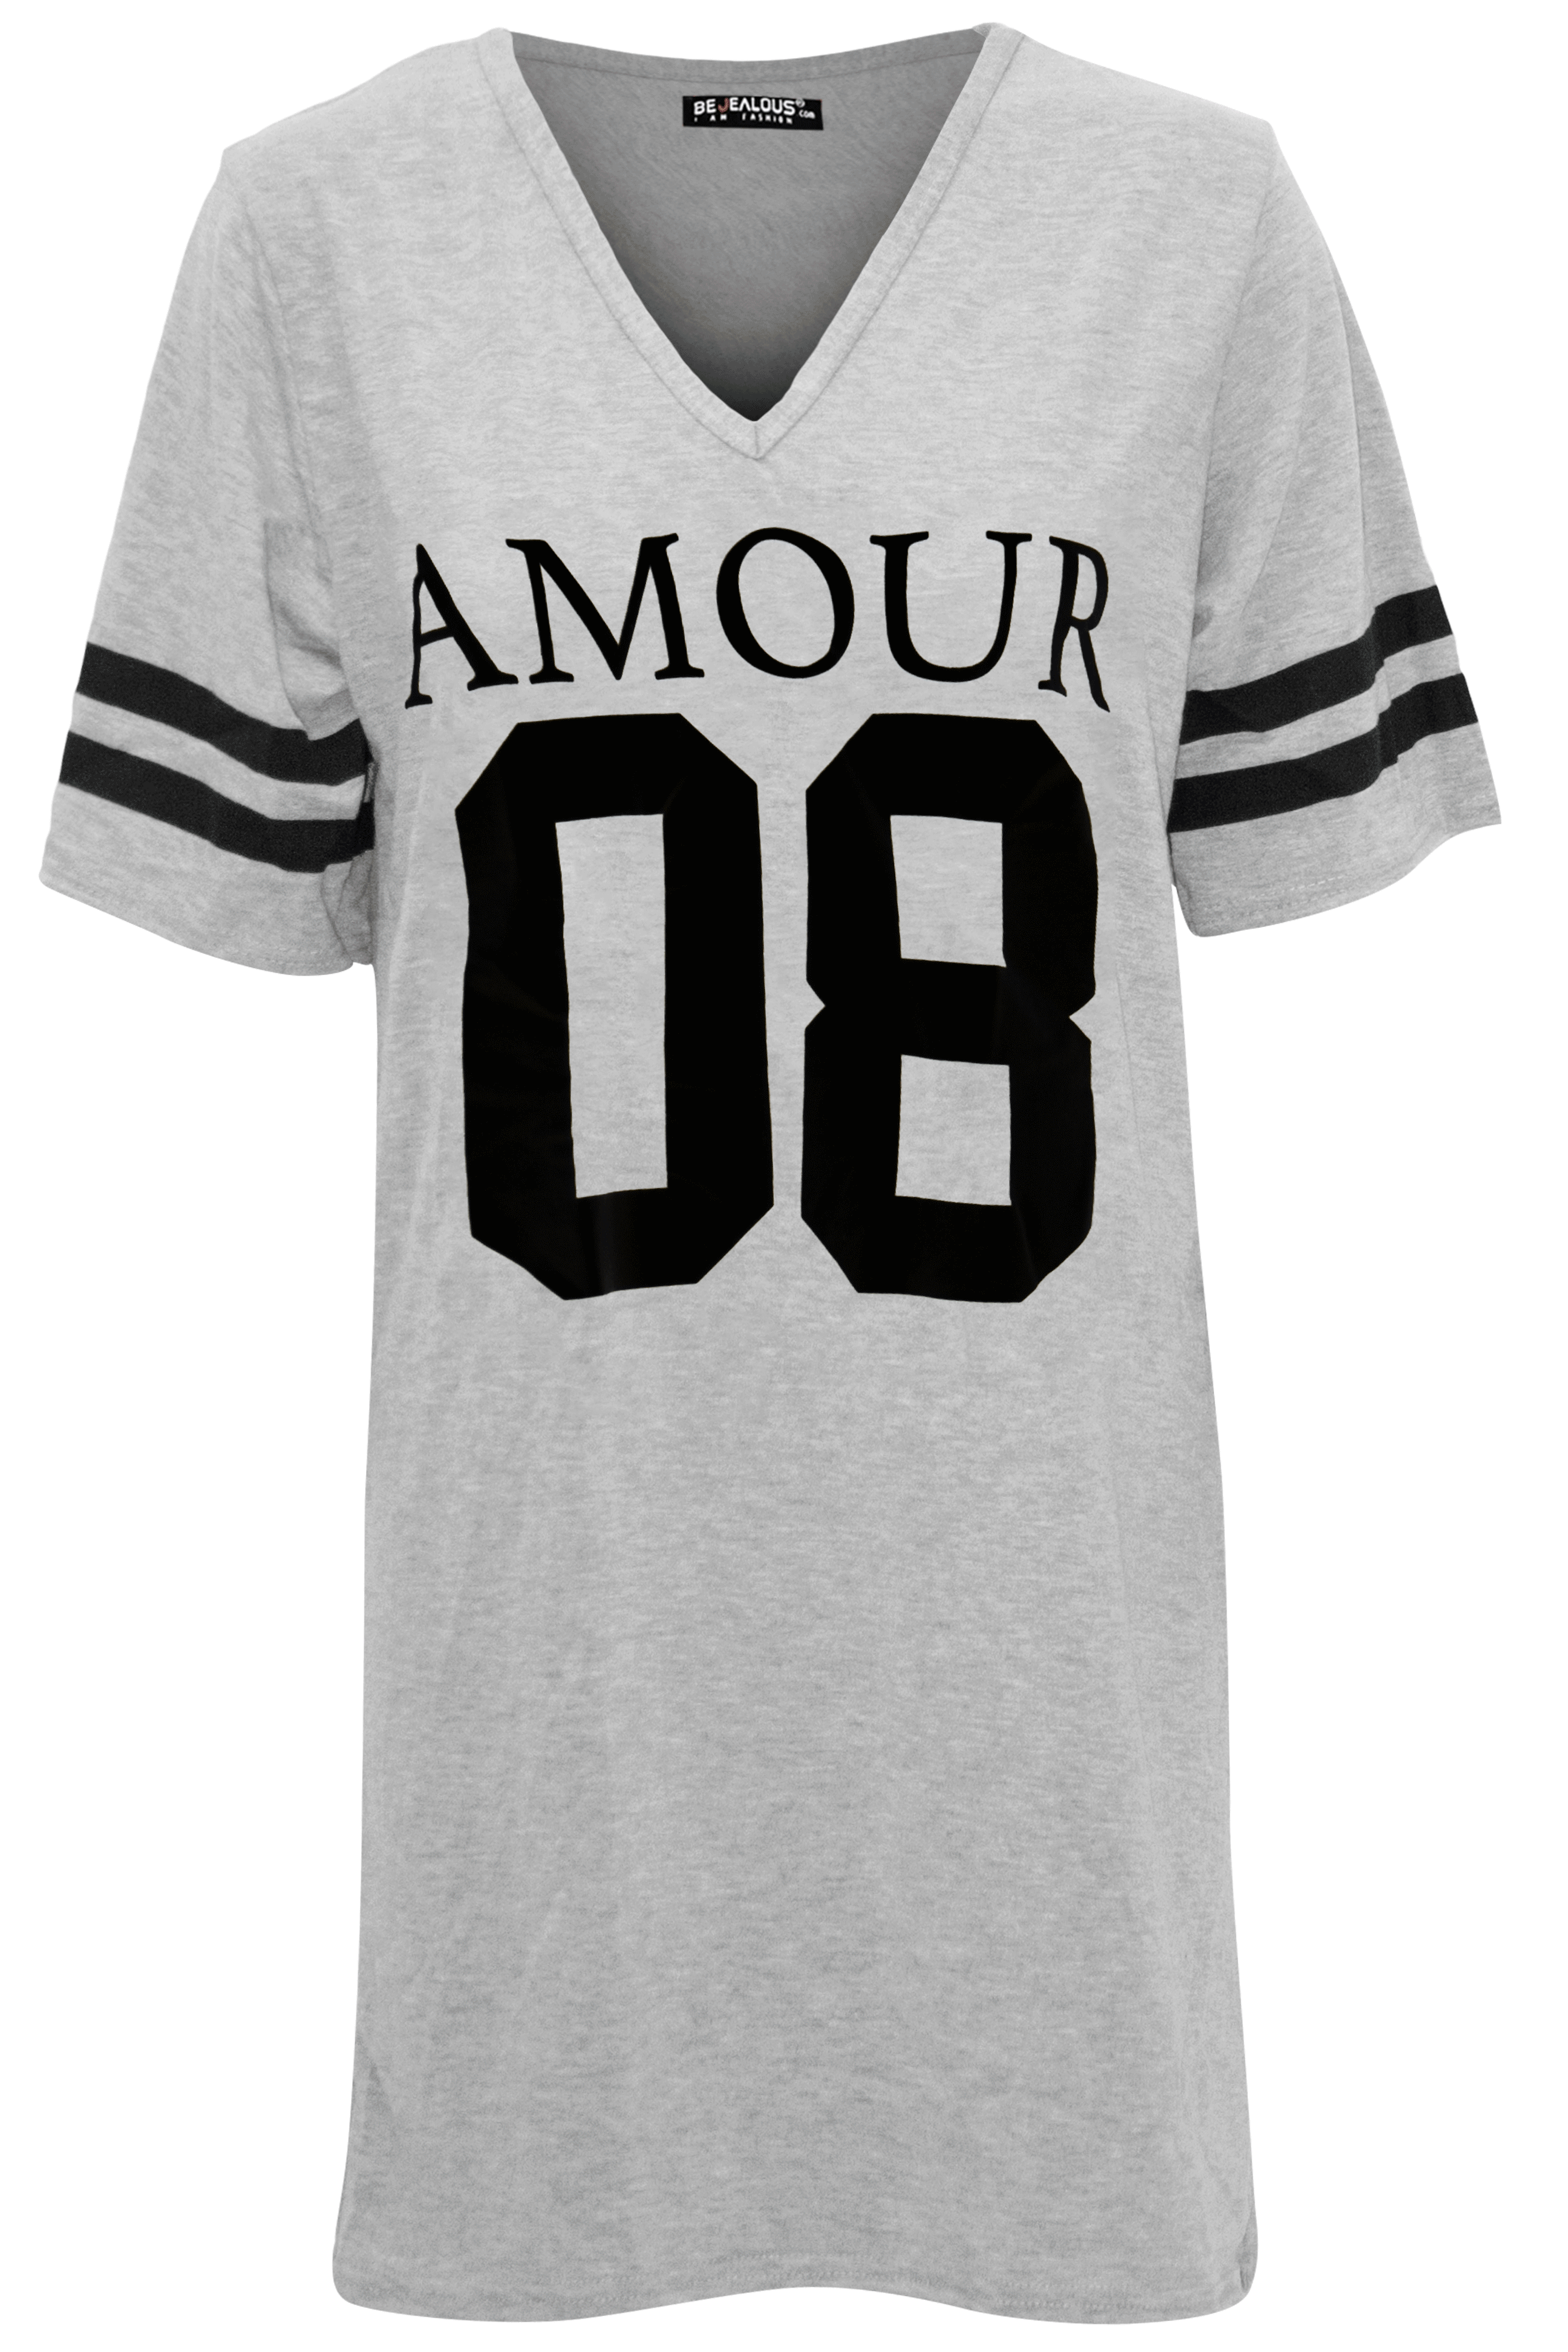 Lilli Amour Slogan Print Tshirt Dress - bejealous-com